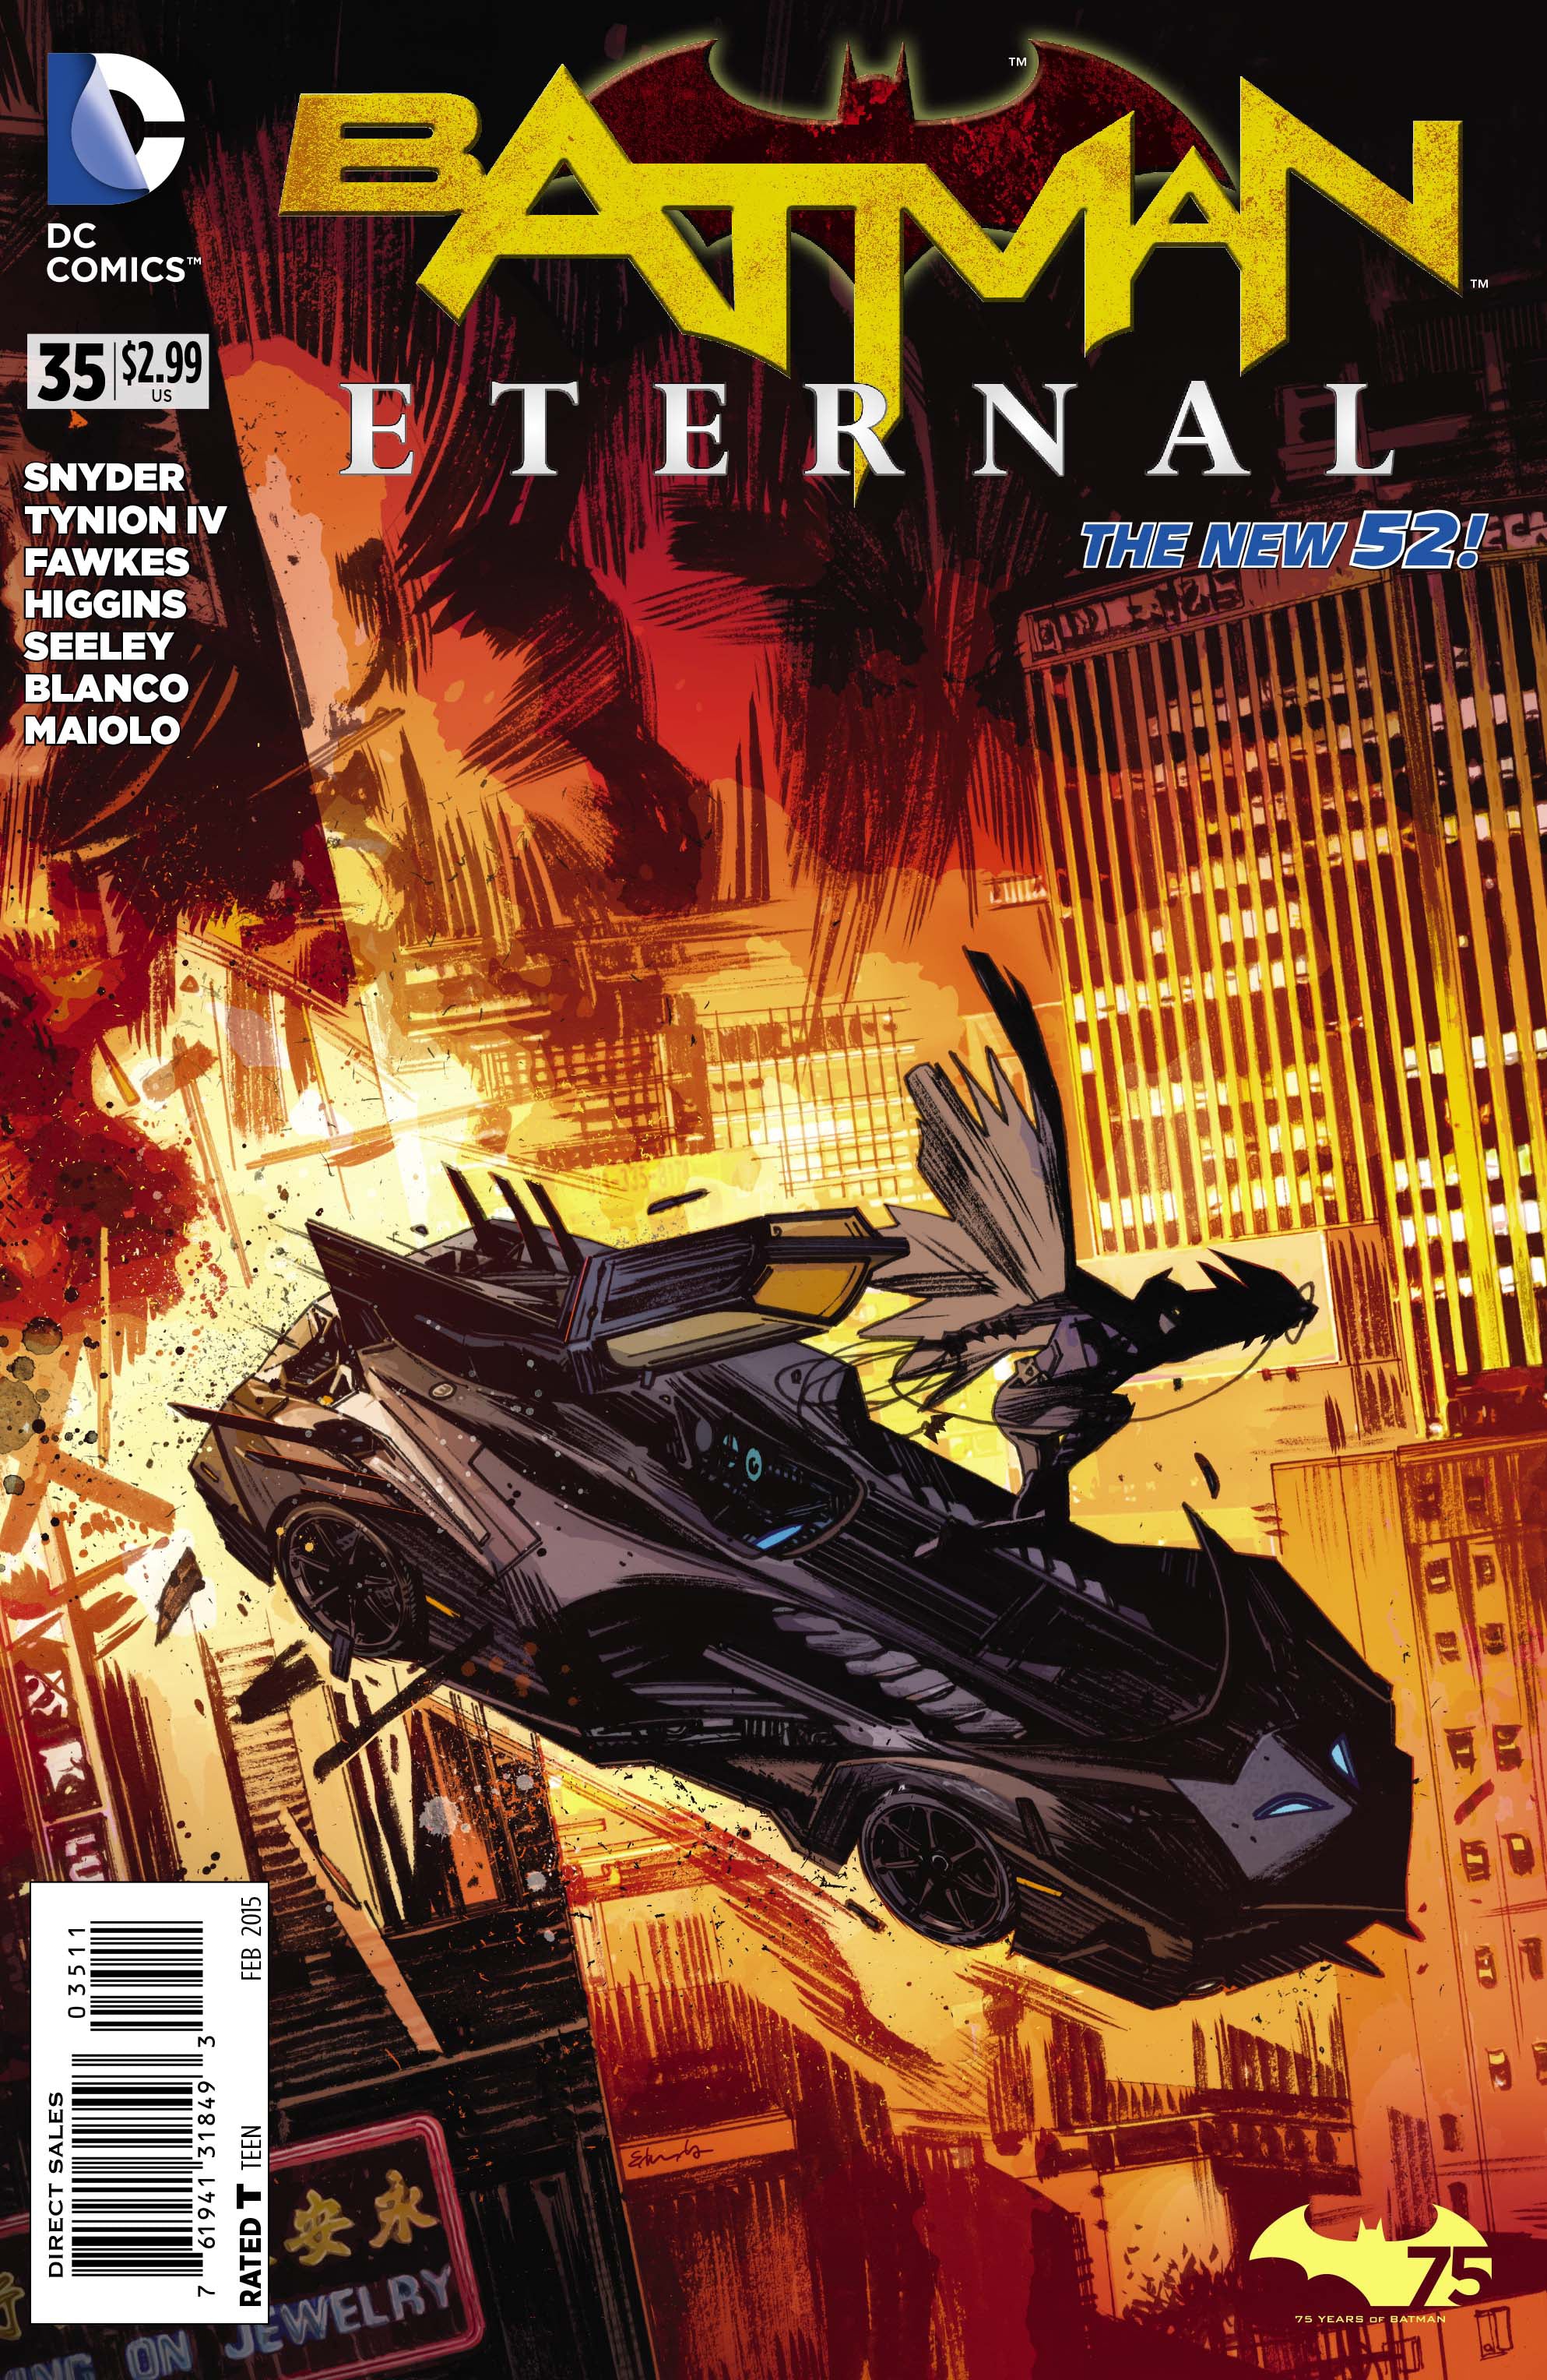 BATMAN ETERNAL #35 | Game Master's Emporium (The New GME)